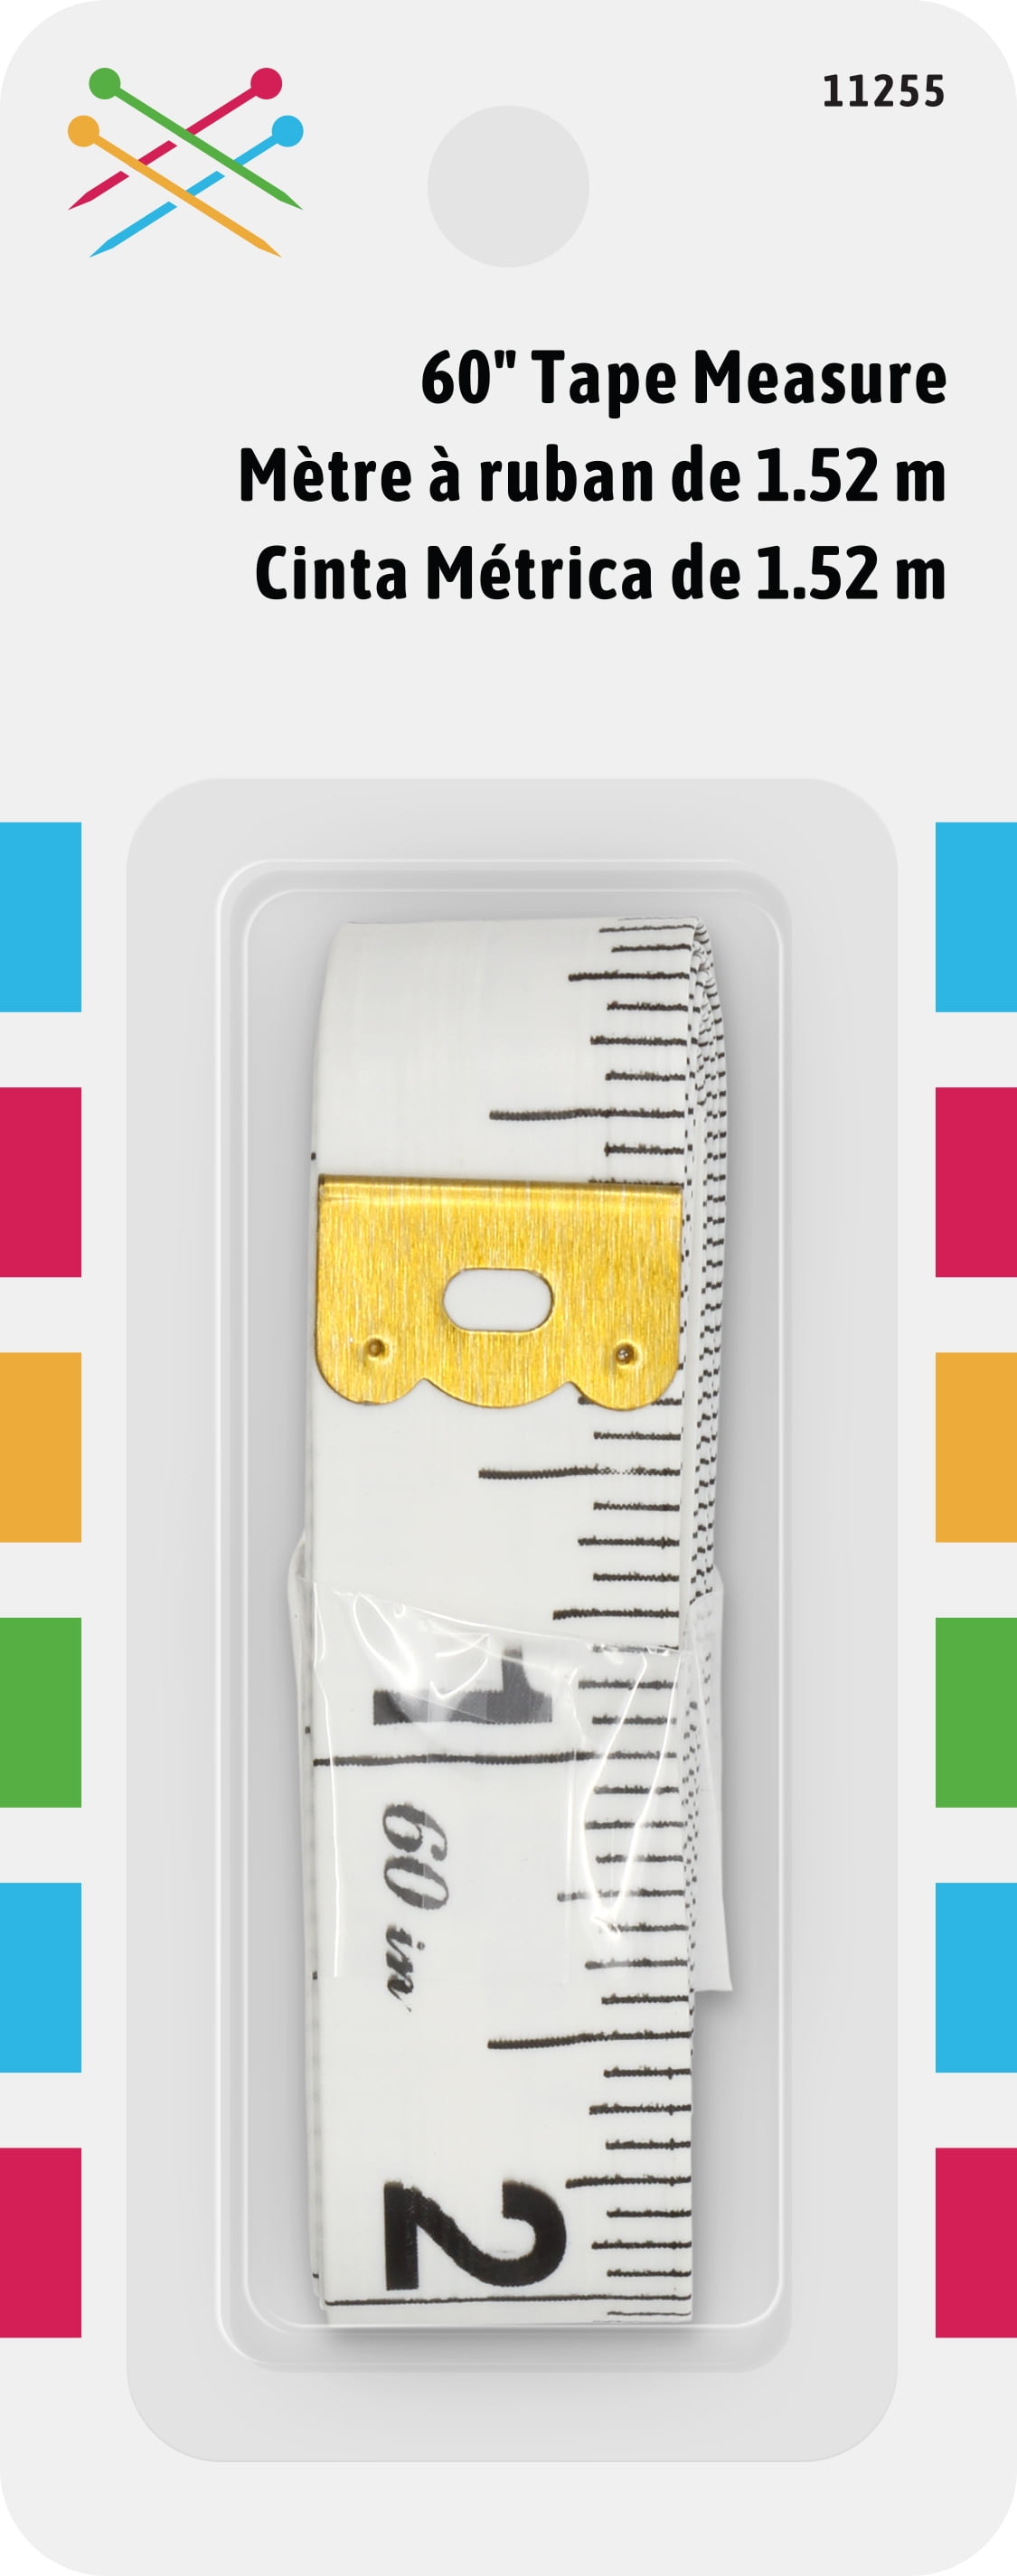 Prym Consumer USA Inc 60" Tape Measure in White